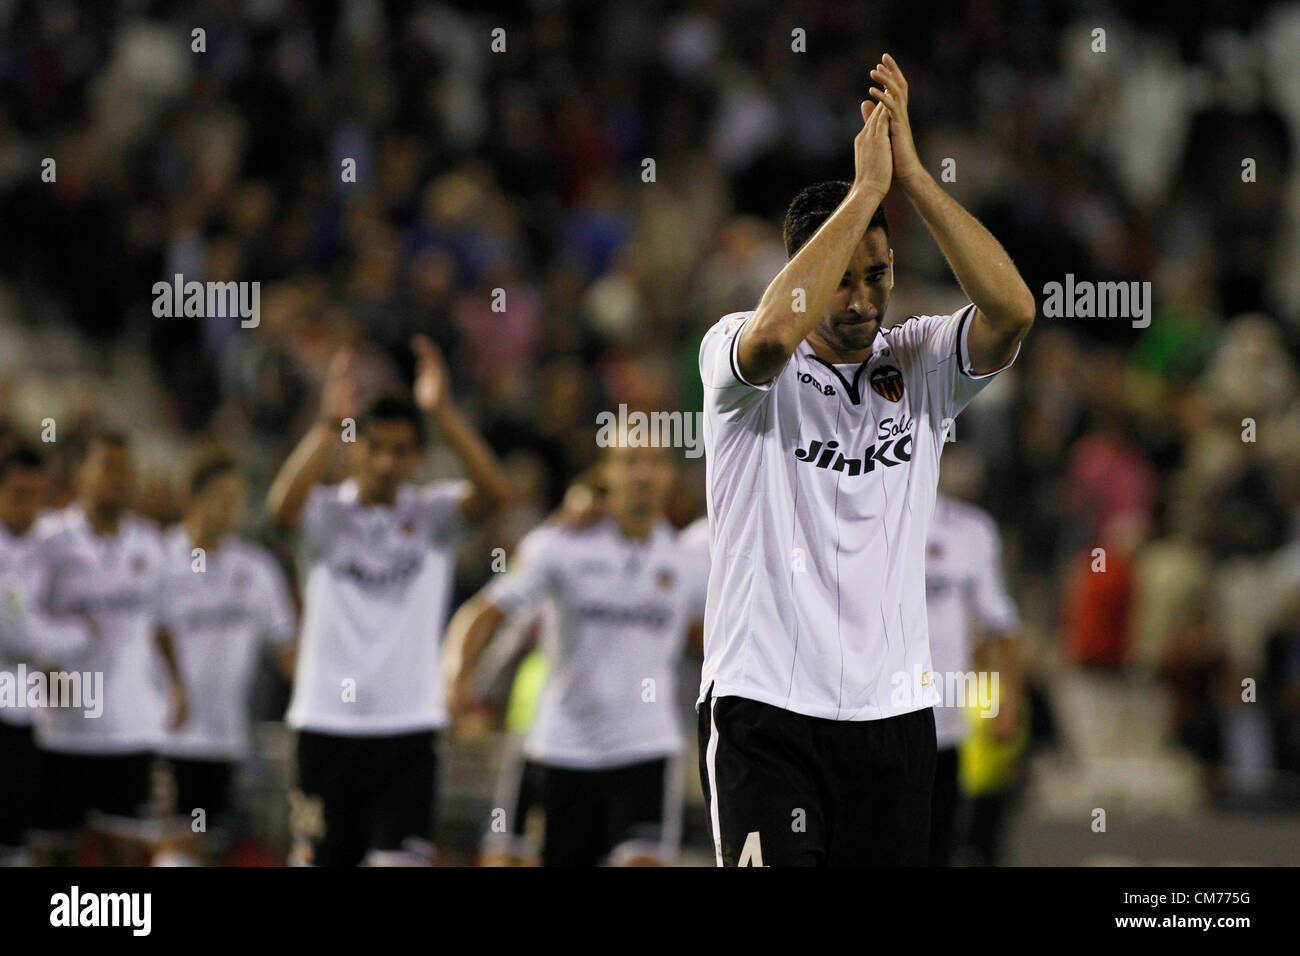 La Liga Spain - Matchday 9 - Valencia CF vs. Ath. Bilbao - Adil Rami claps to celebrate victory with the attendants Stock Photo